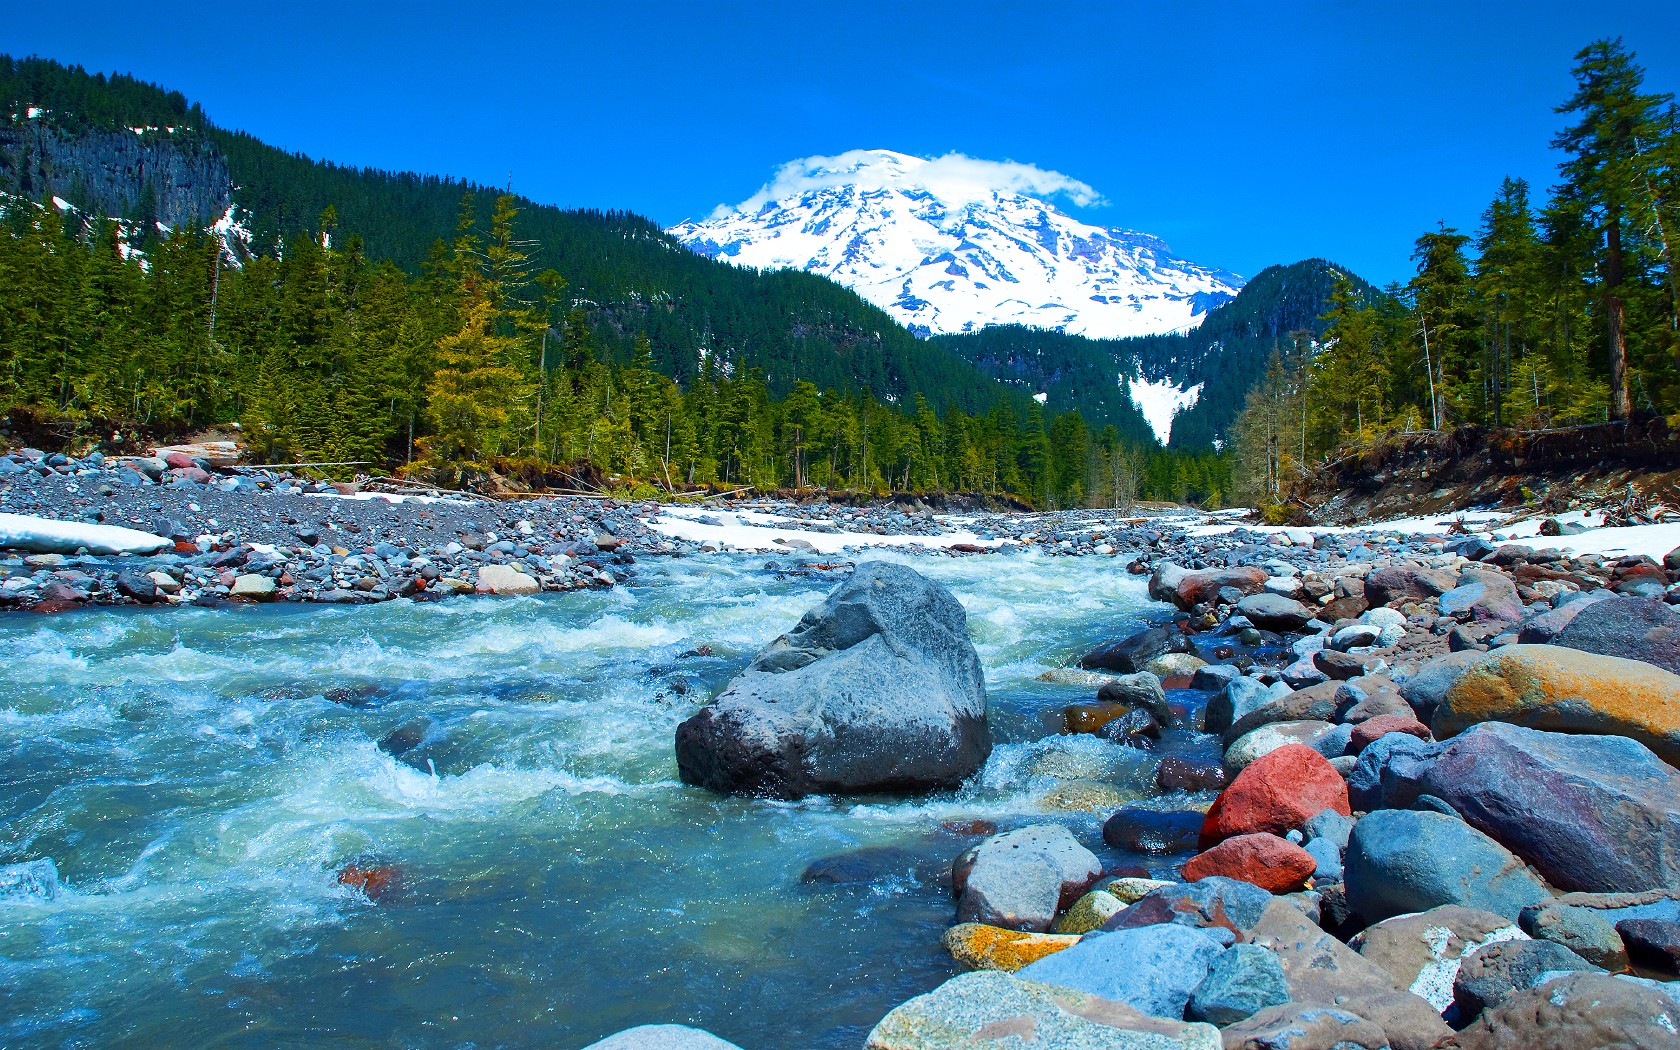 General 1680x1050 river stones mountains Mount Rainier National Park Washington State USA nature snowy peak